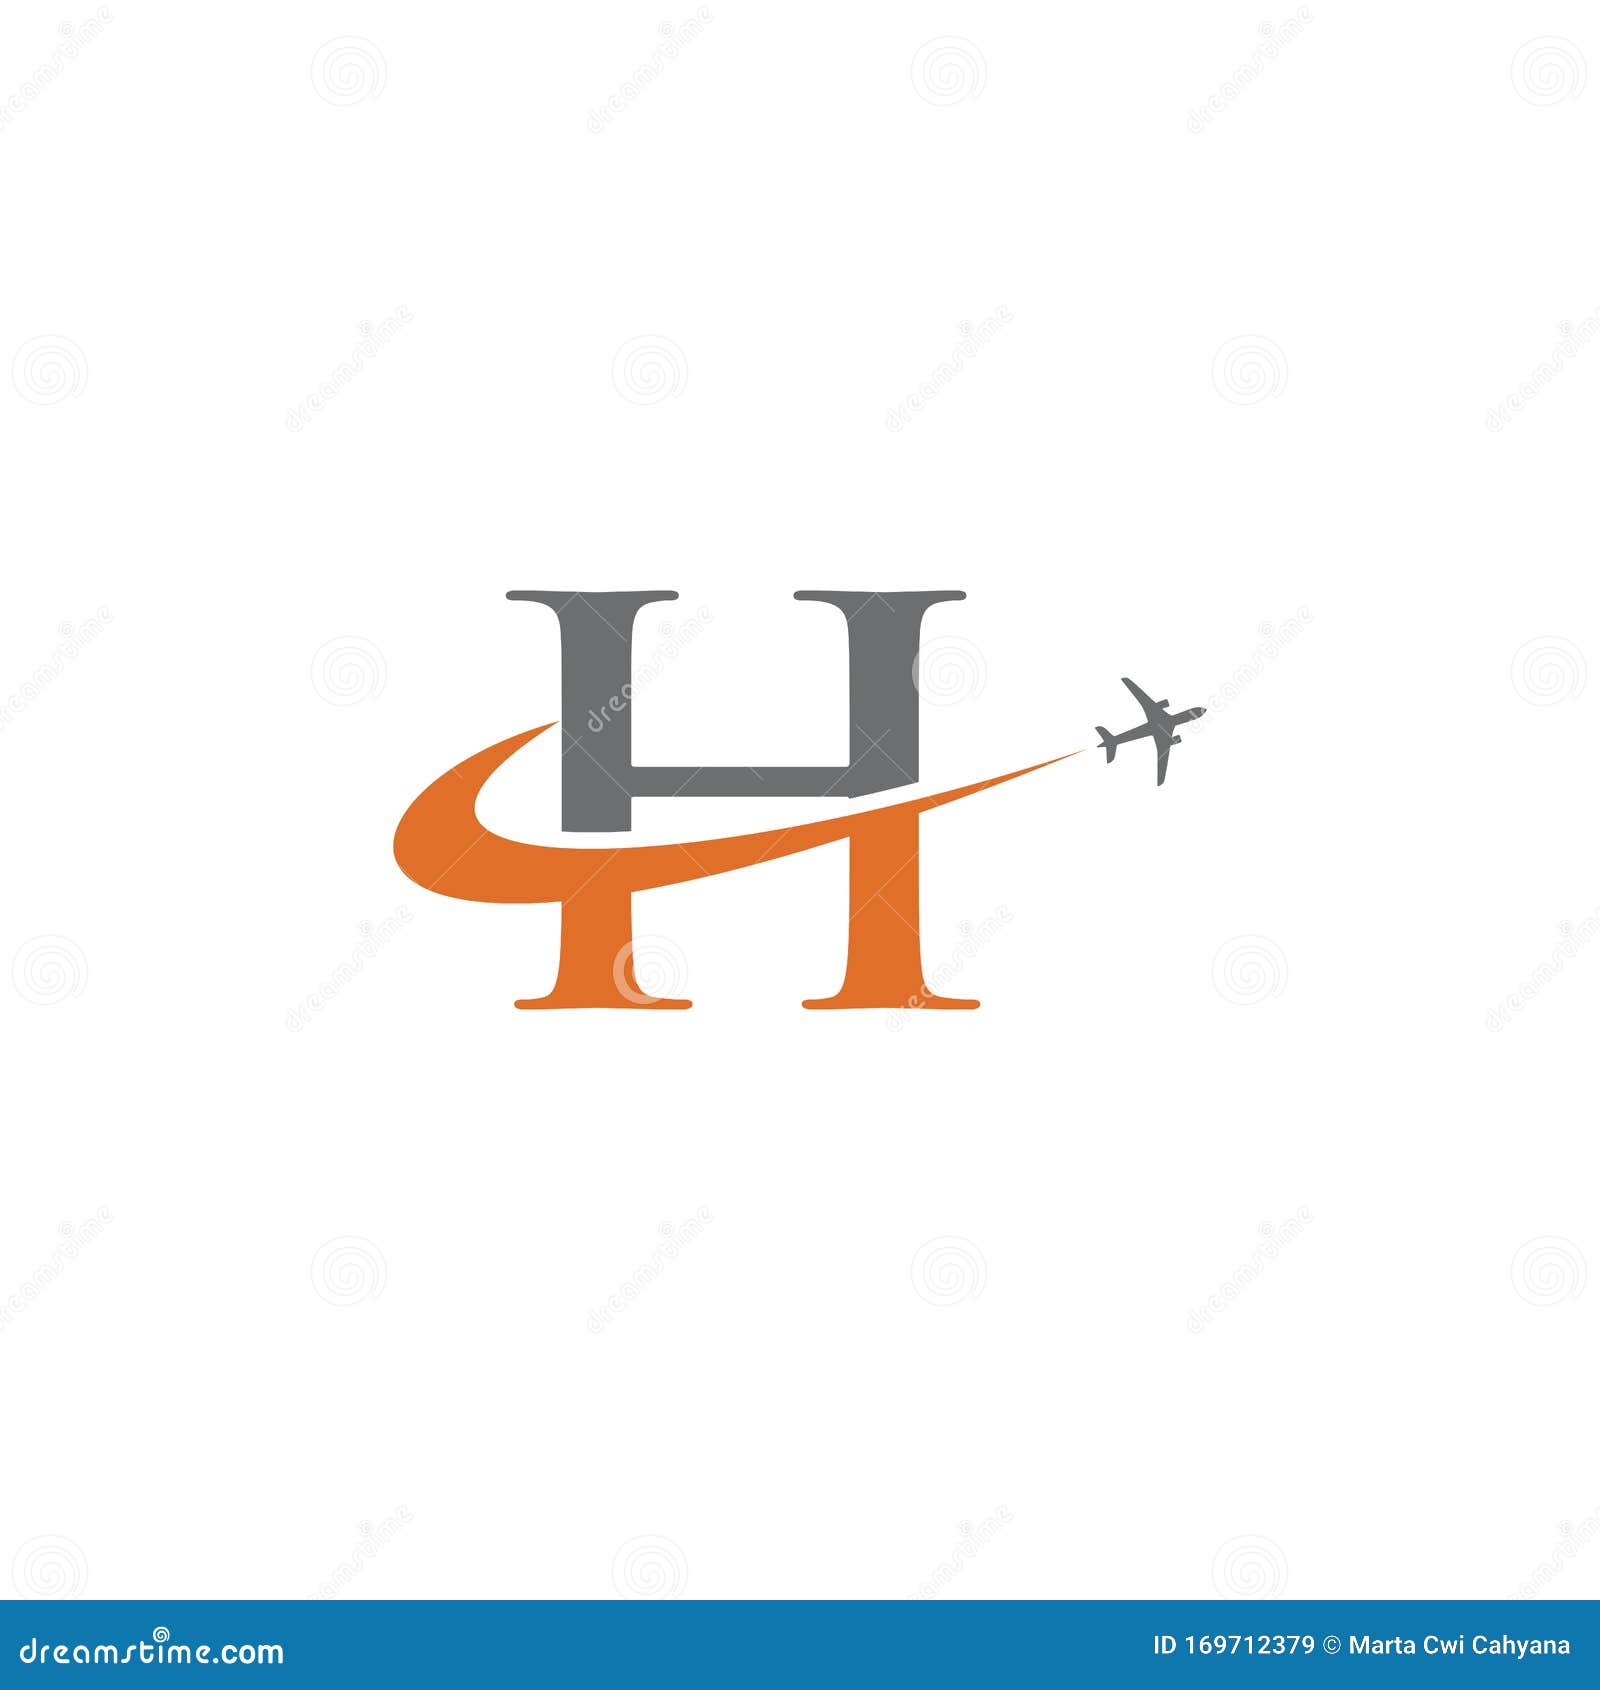 h travel logo